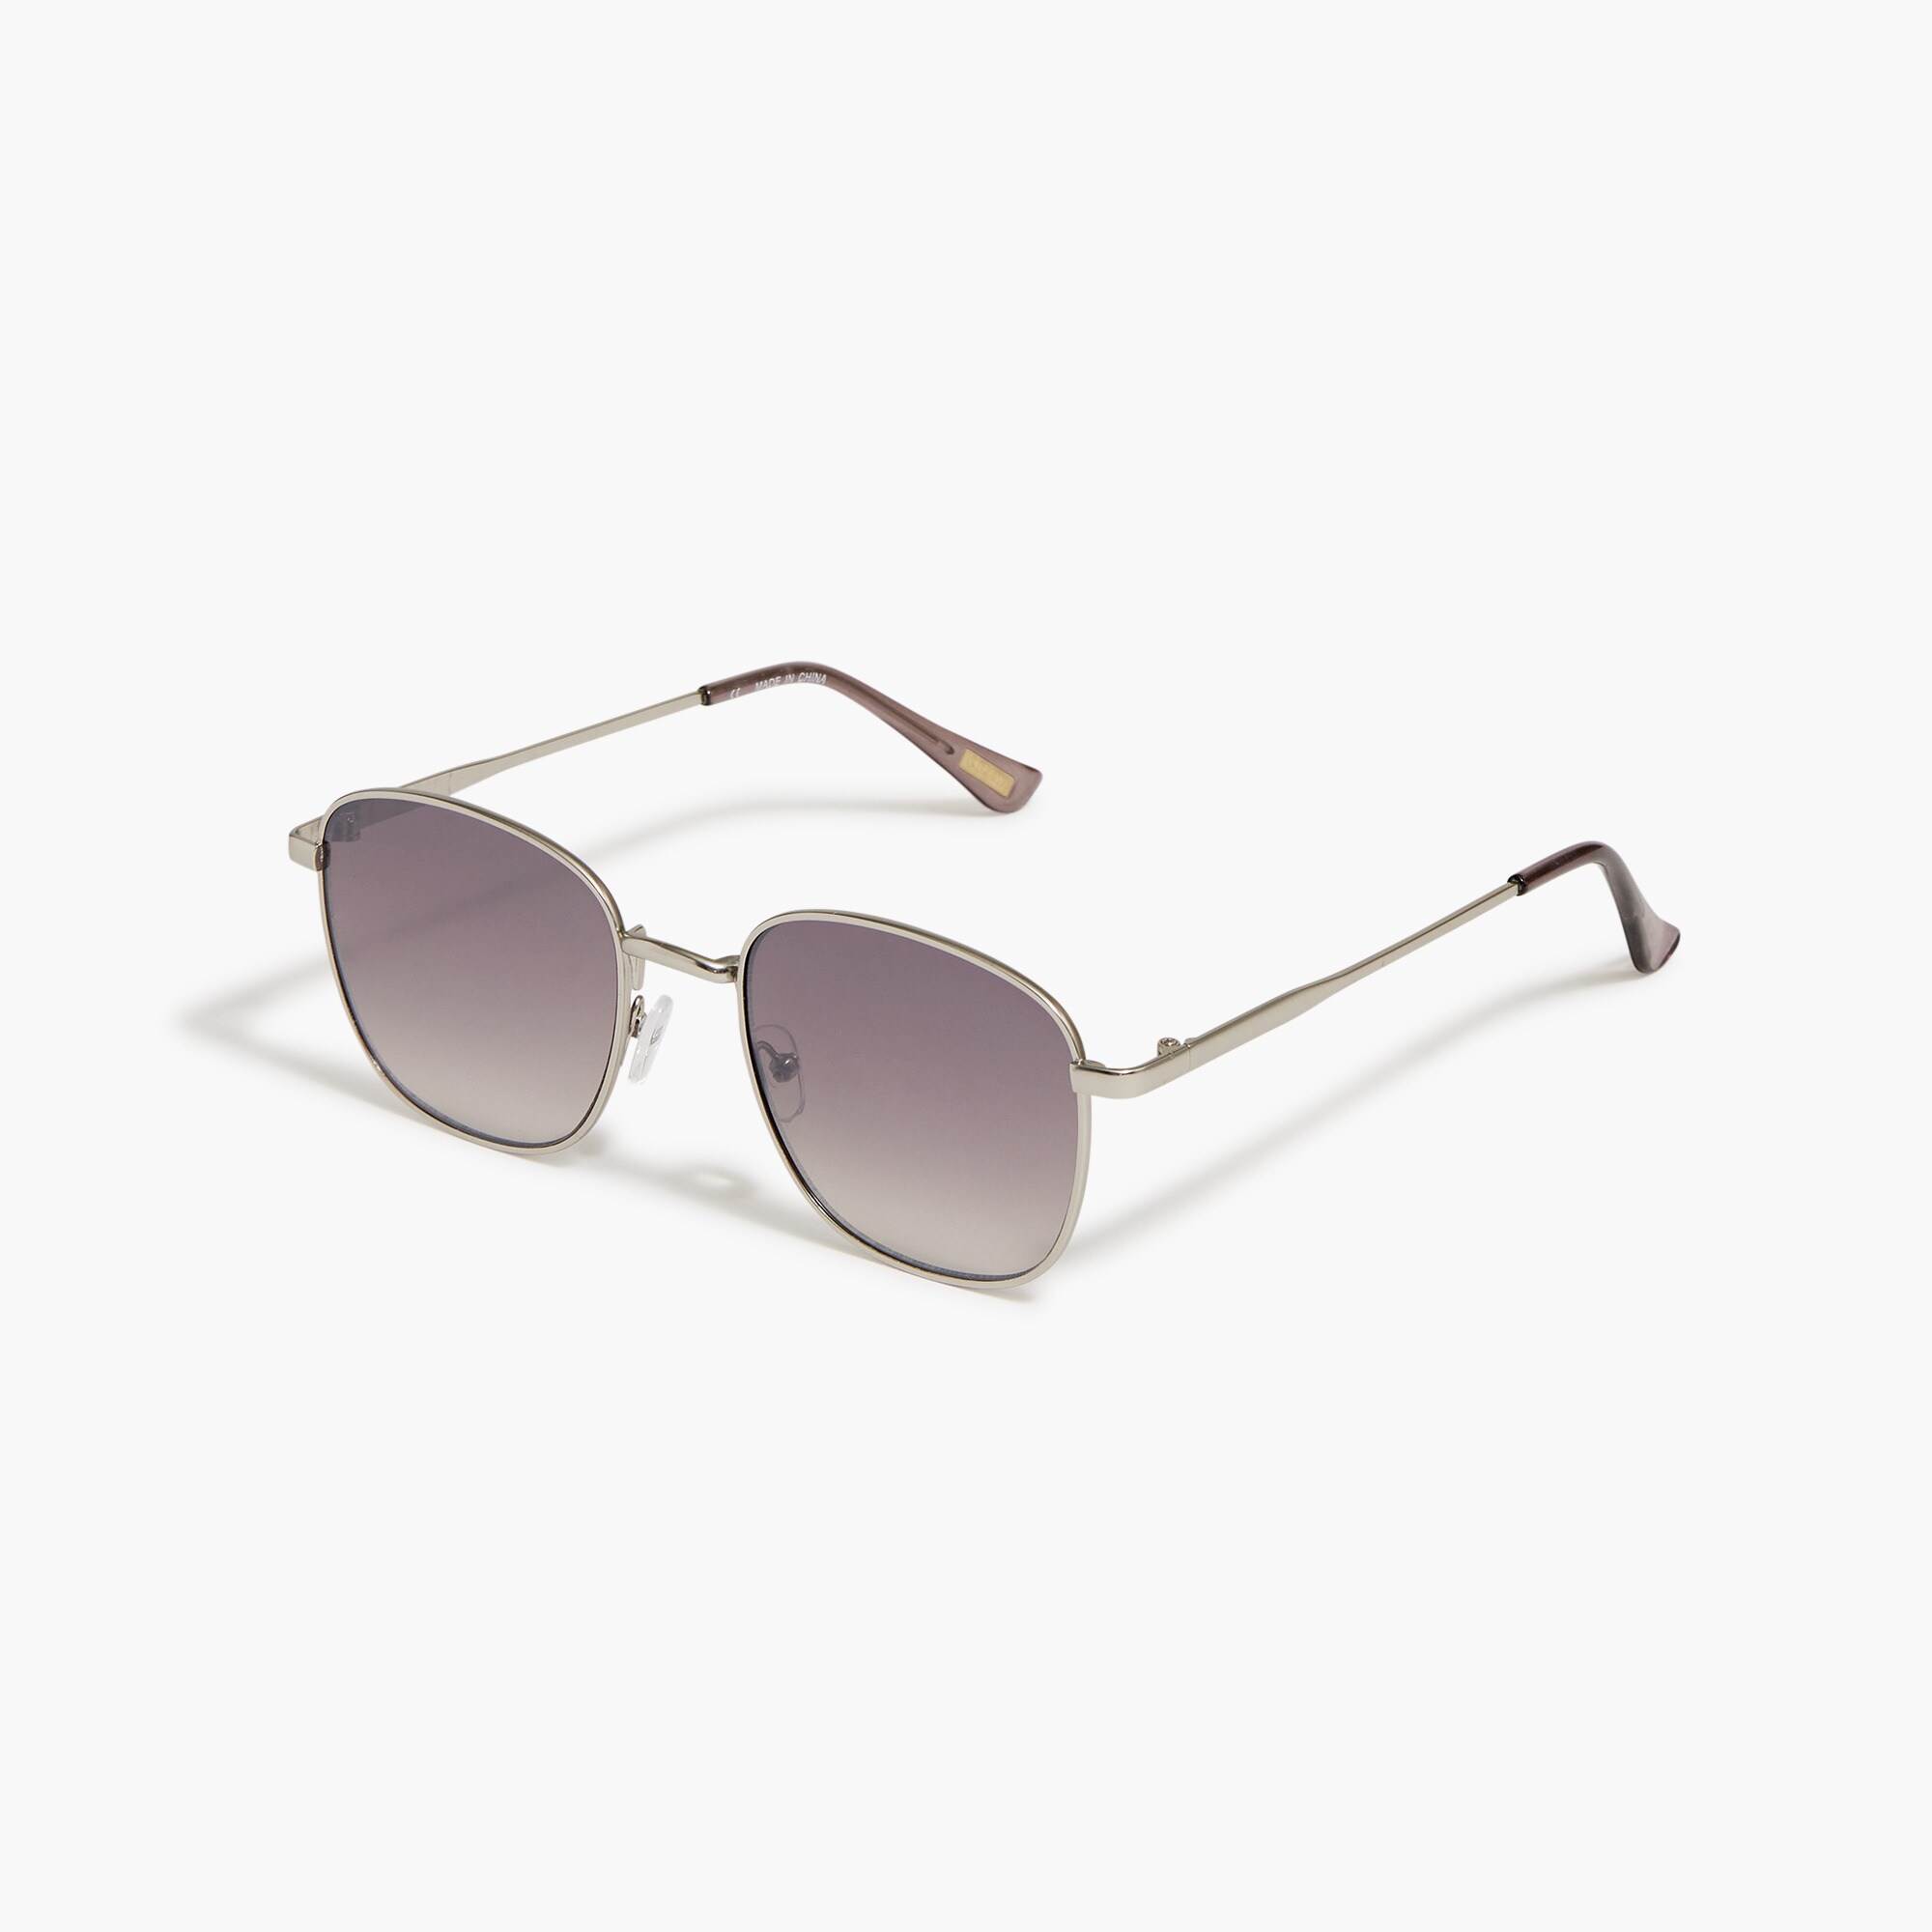  Round-frame sunglasses